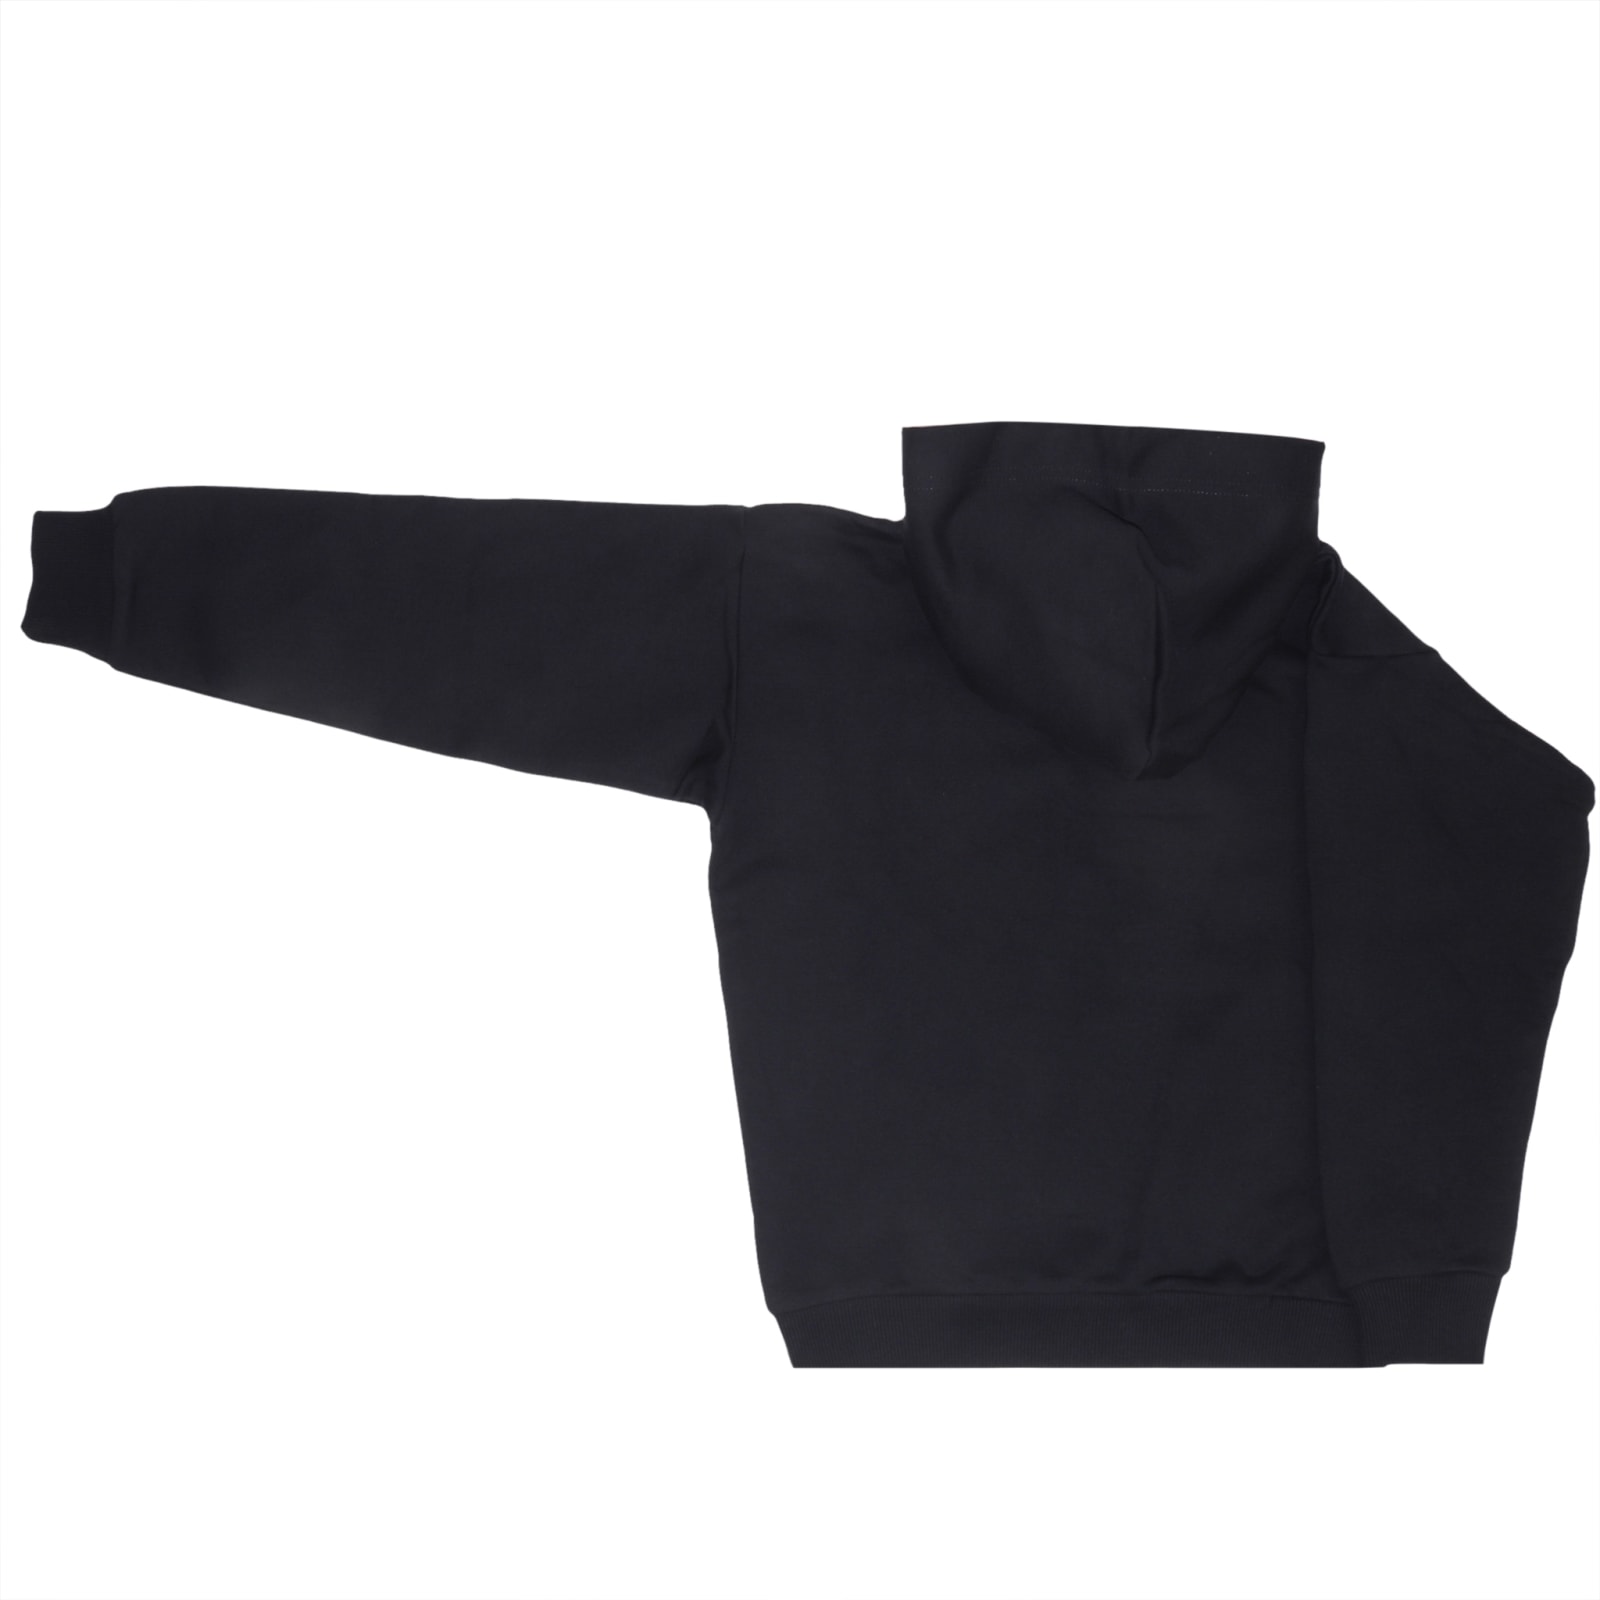 Shop Diesel Sdivision-logox Over Sweatshirt In Black